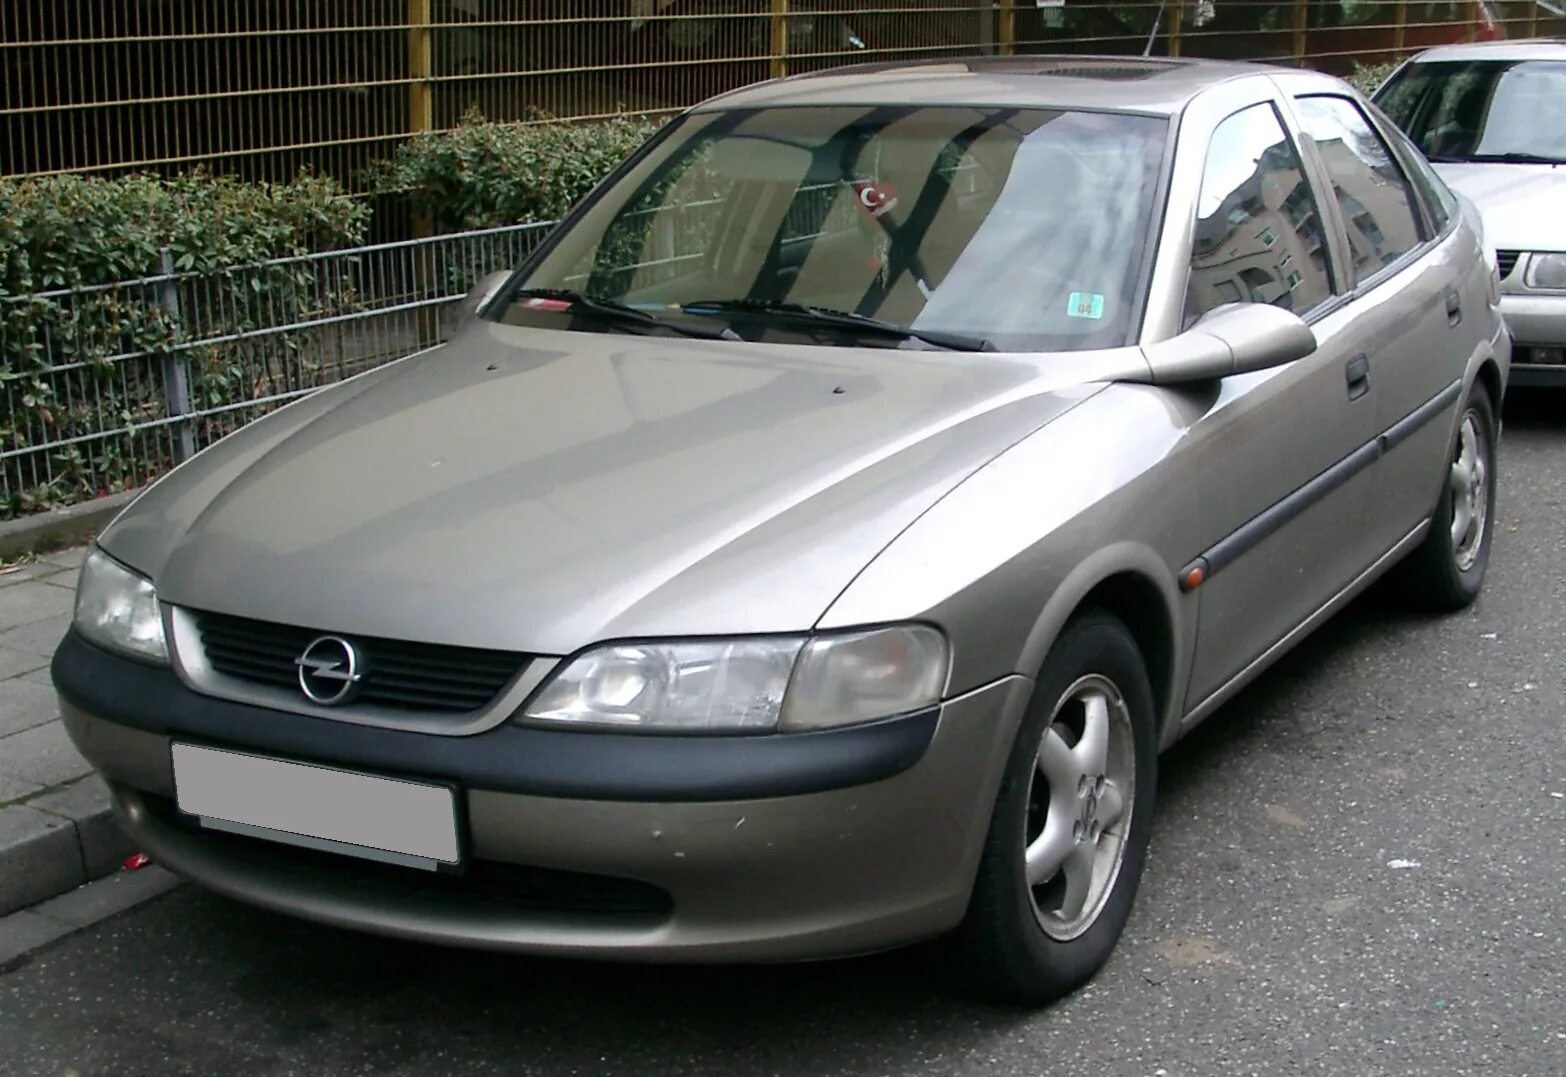 Автомобиль вектра б. Opel Vectra b. Опель Вектра 2 1996. Опель Вектра 1.6 1996. Opel Vectra b 1.6.